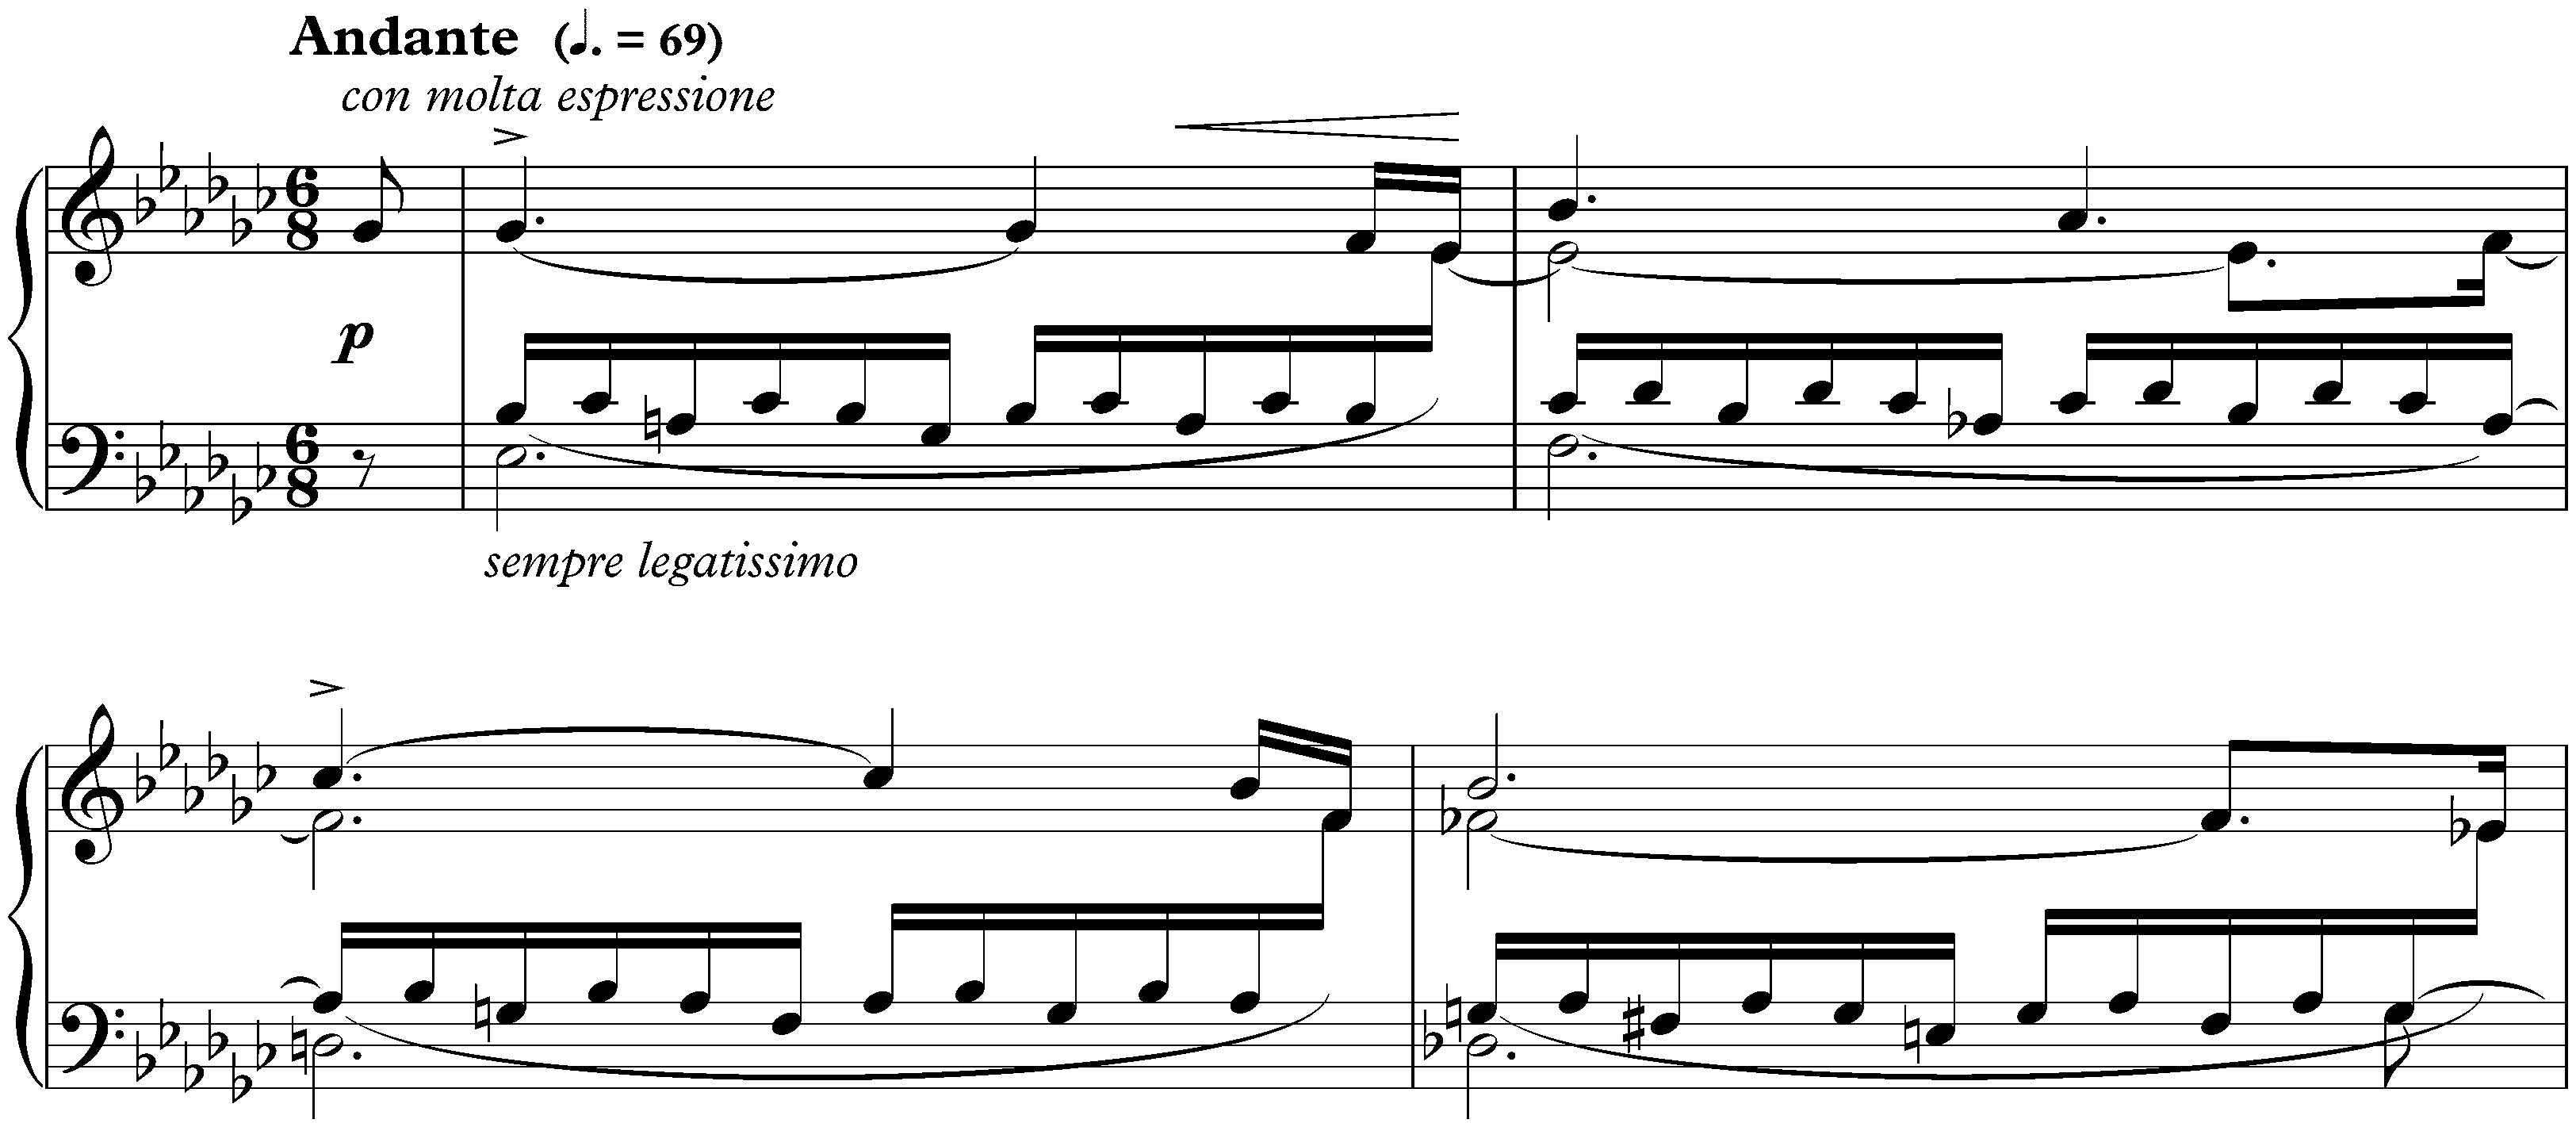 Twelve Études, op. 10; 6. E-flat minor